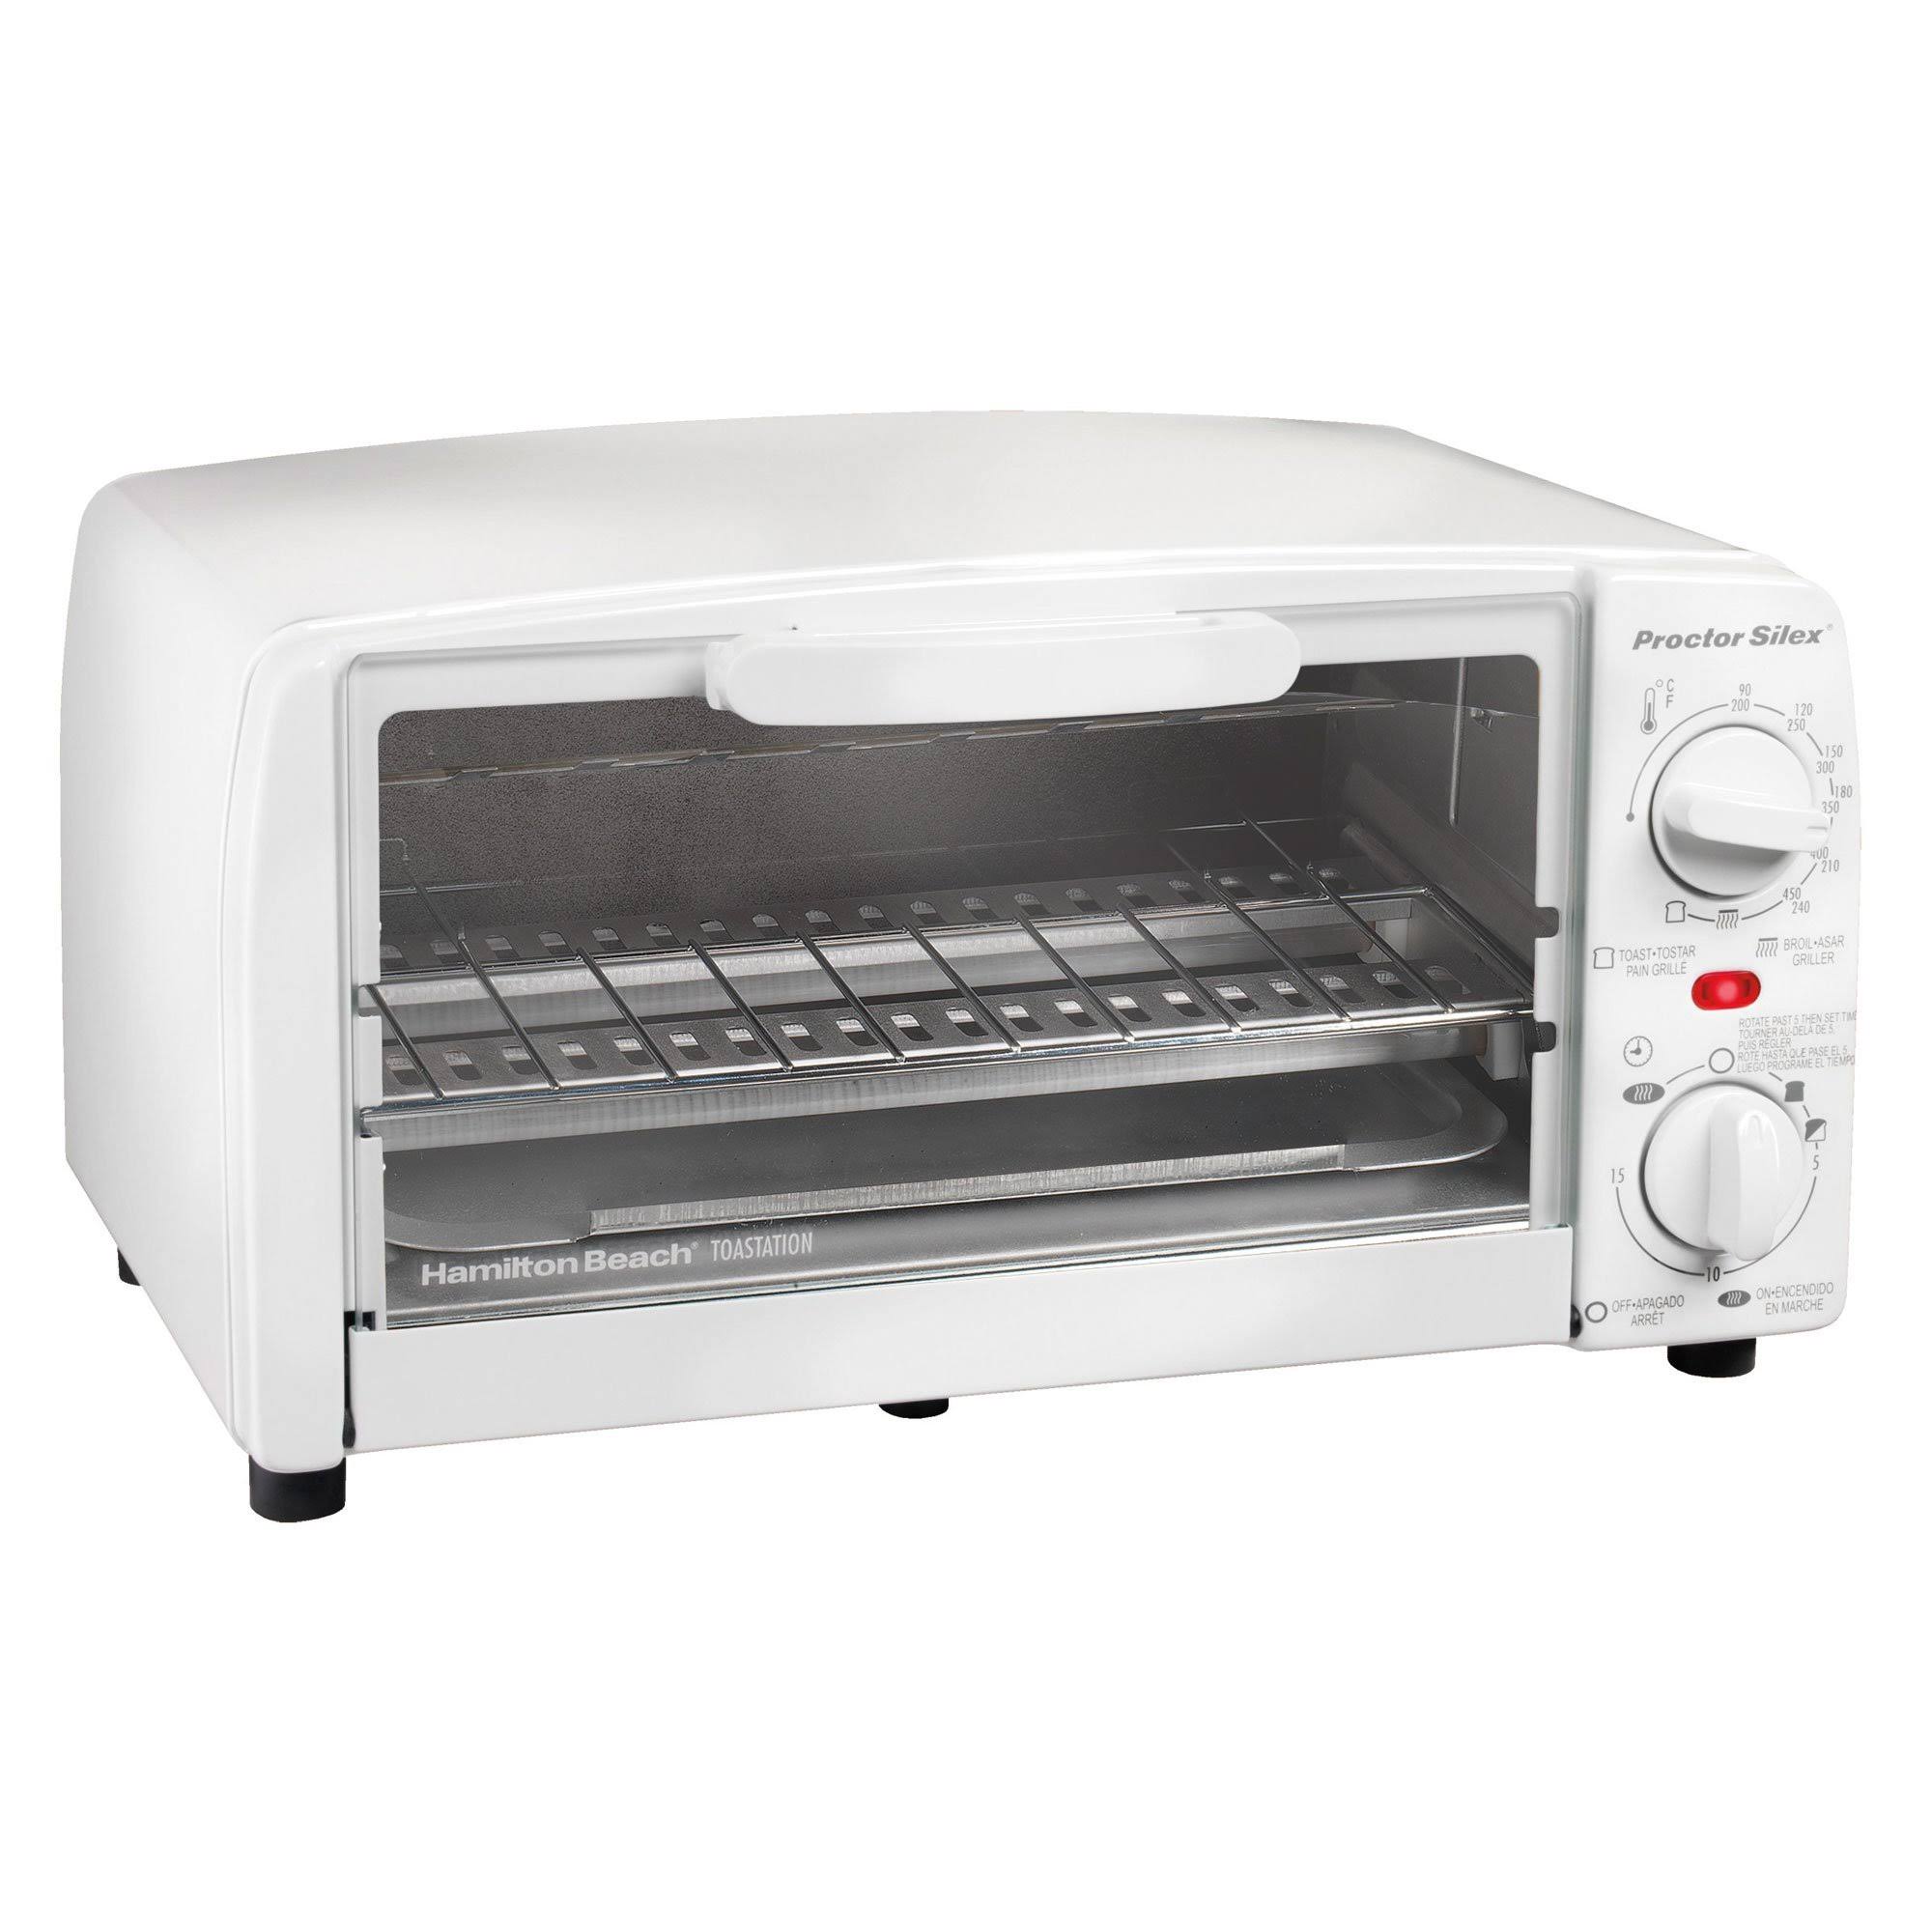 Proctor Silex Toaster Oven - White